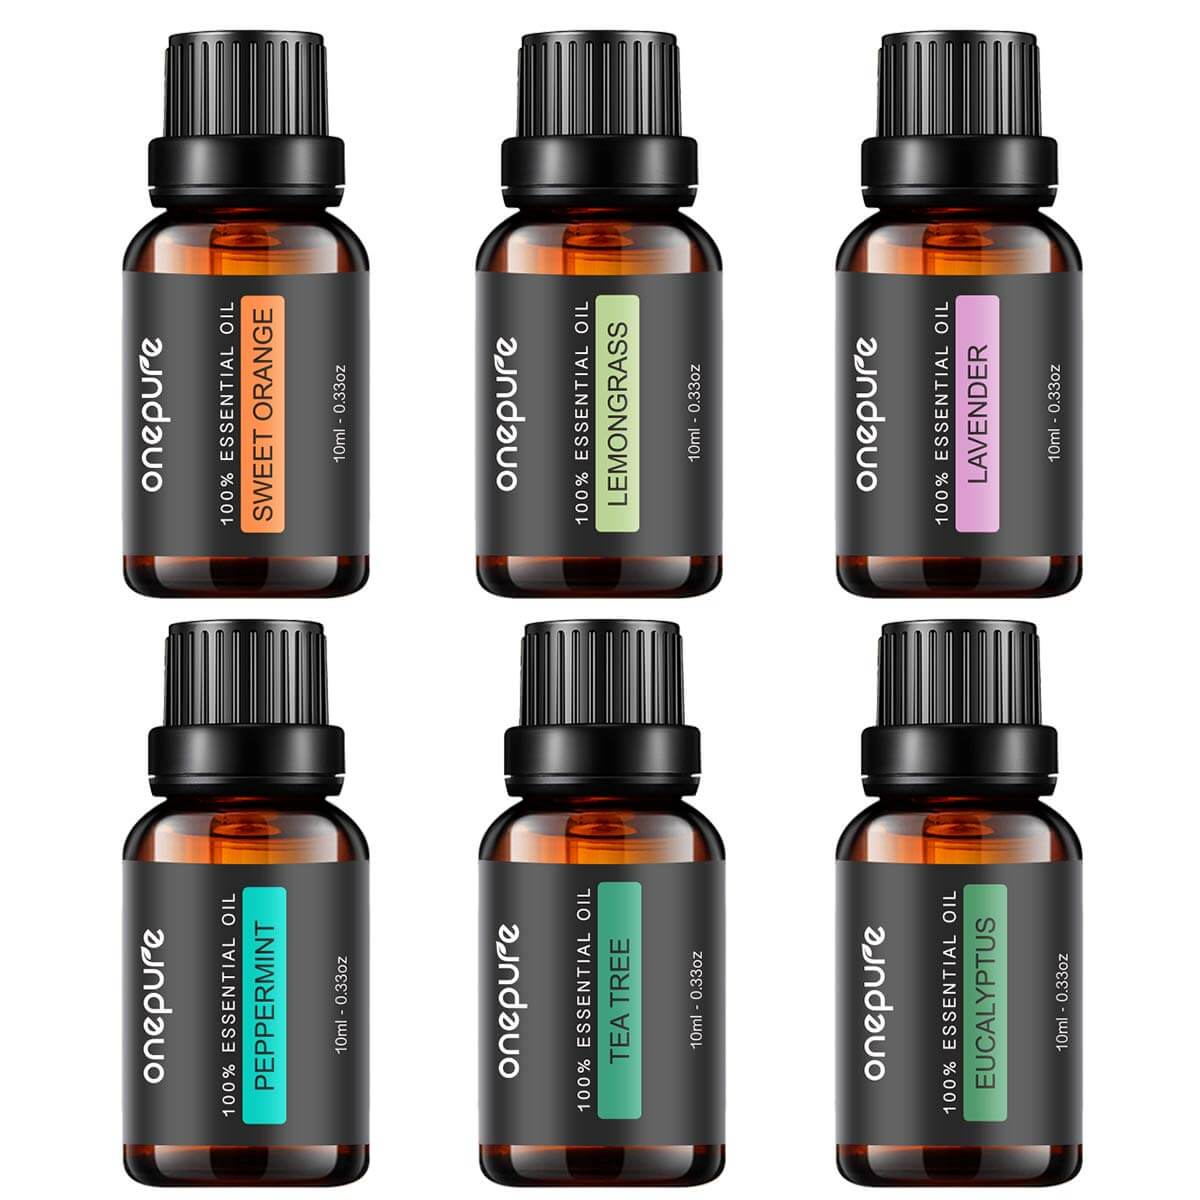 Onepure Essential Oils, 6 x 10ml Essential Oils Gift Set for Diffuser  Humidifier Massage Aromatherapy (Lavender, Tea Tree, Eucalyptus,  Lemongrass